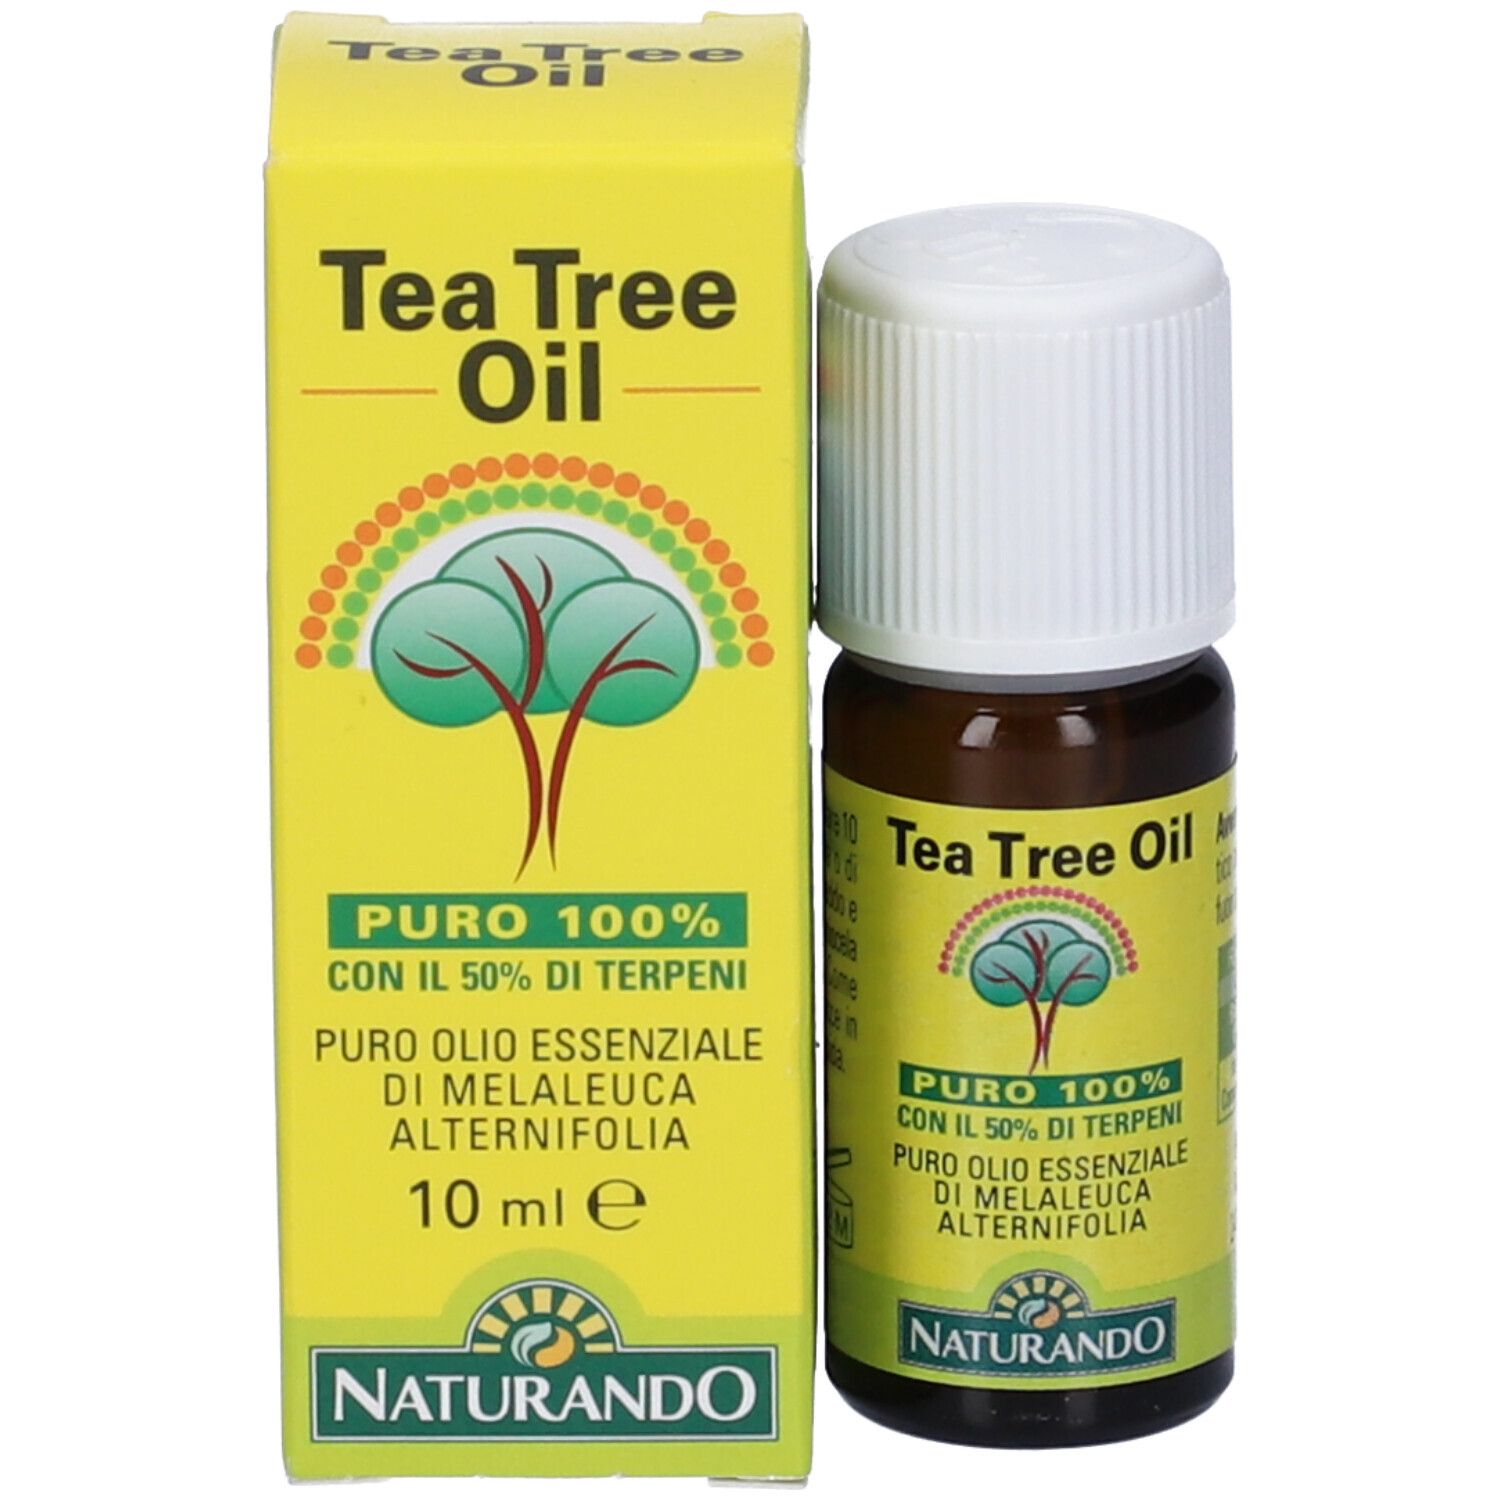 Tea Tree Oil Puro 100%